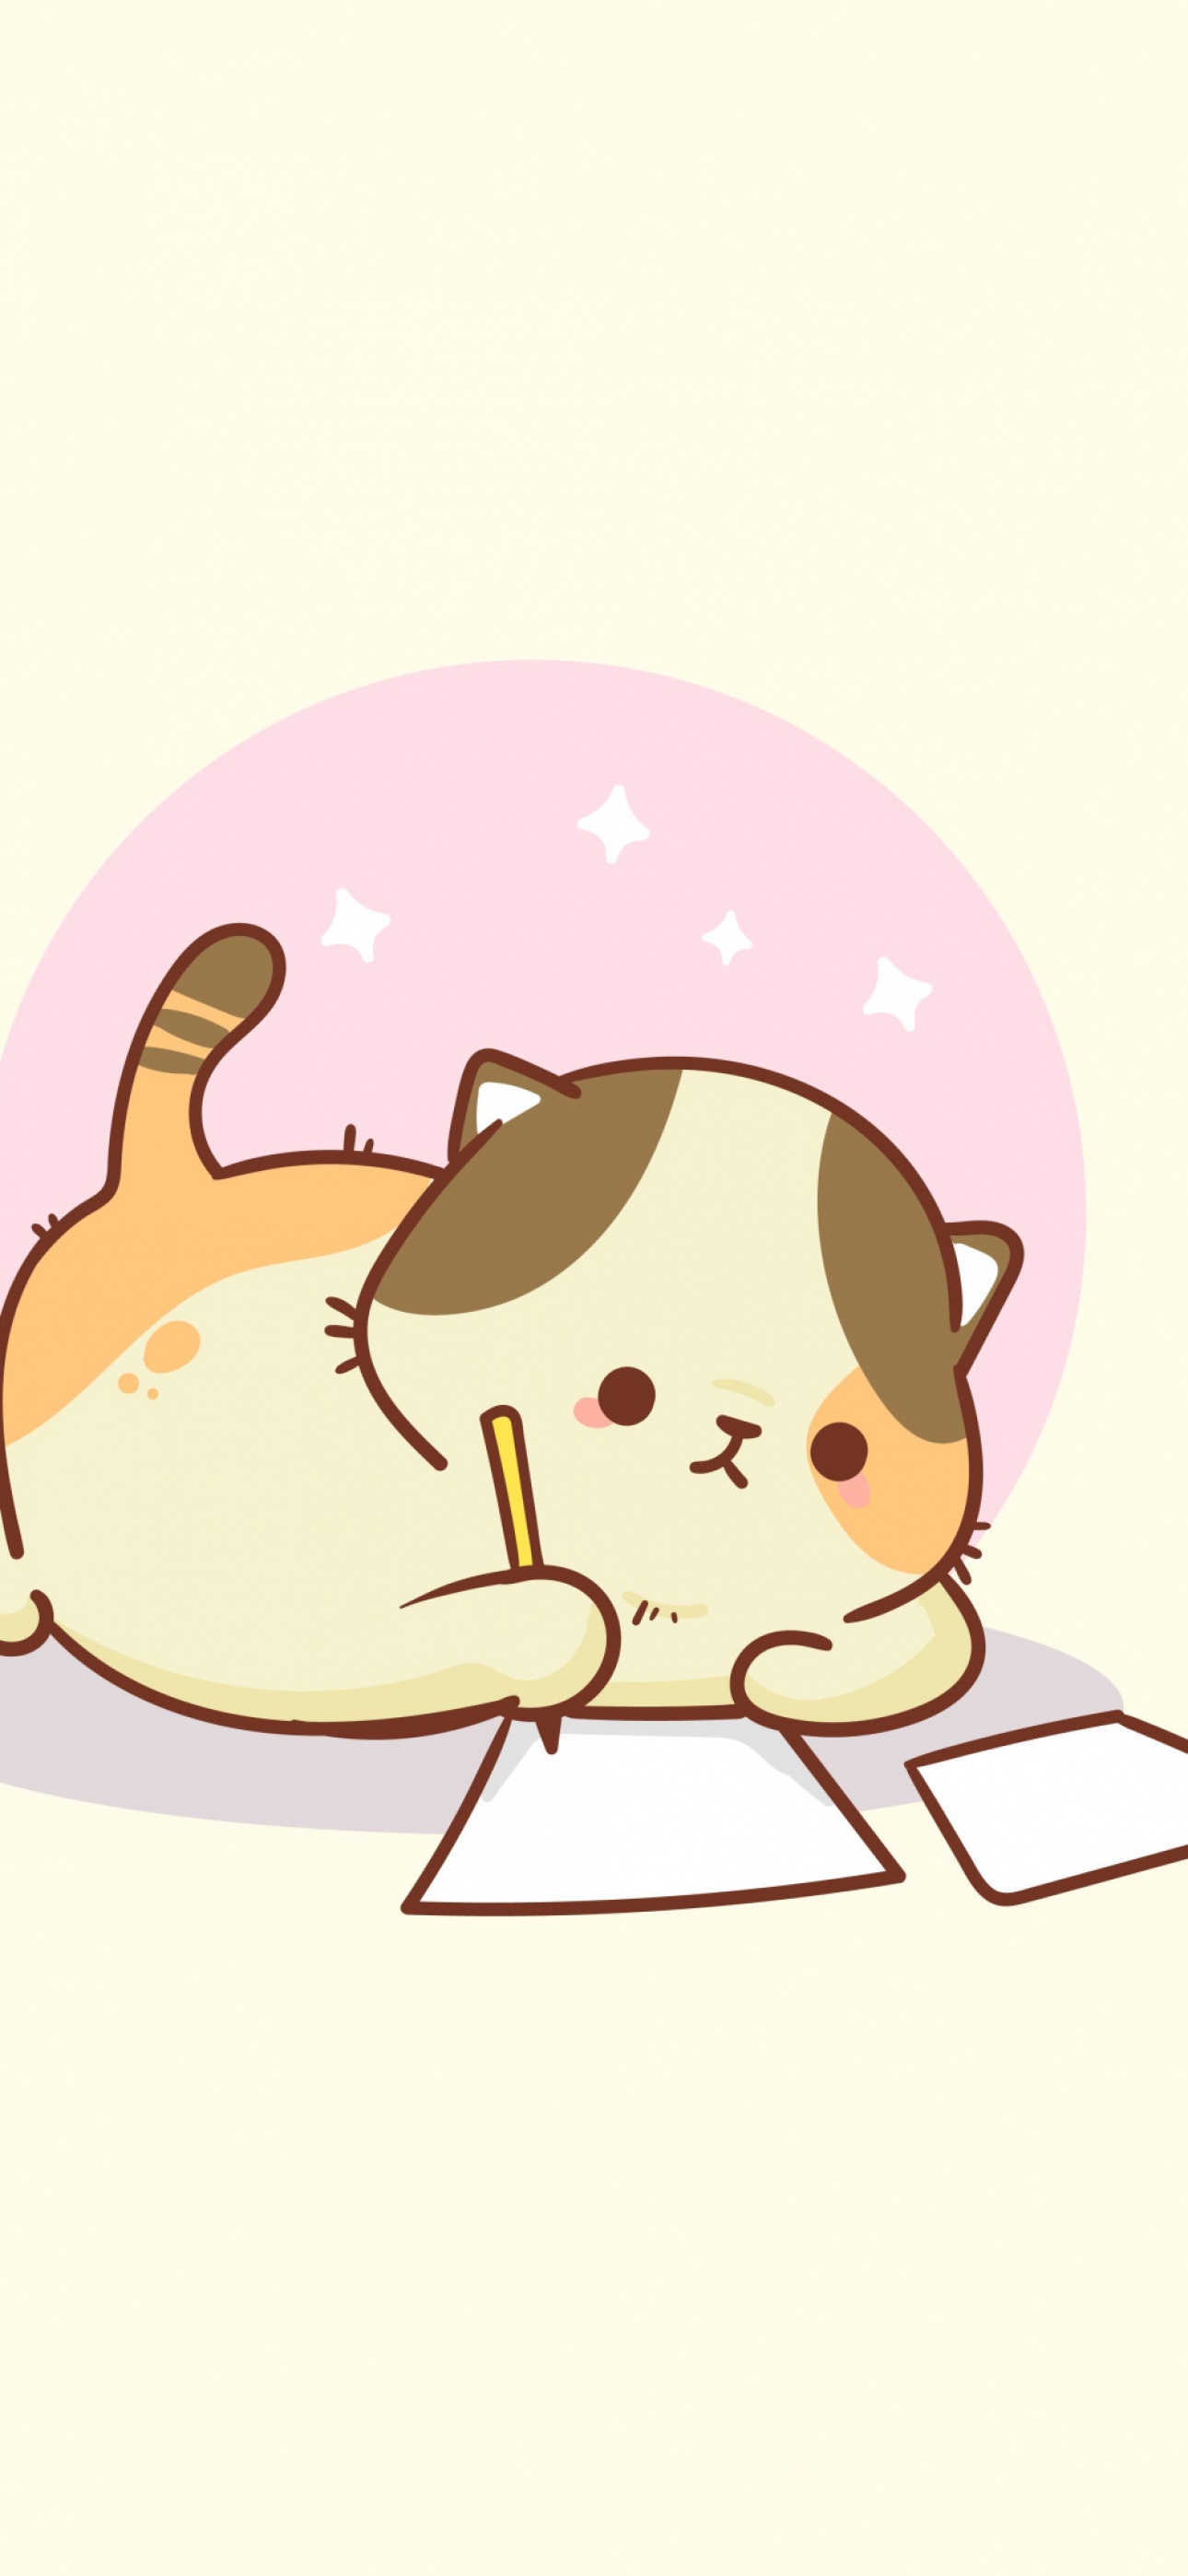 Kagerou Project anime series girl cute cat wallpaper  1920x1080  798430   WallpaperUP